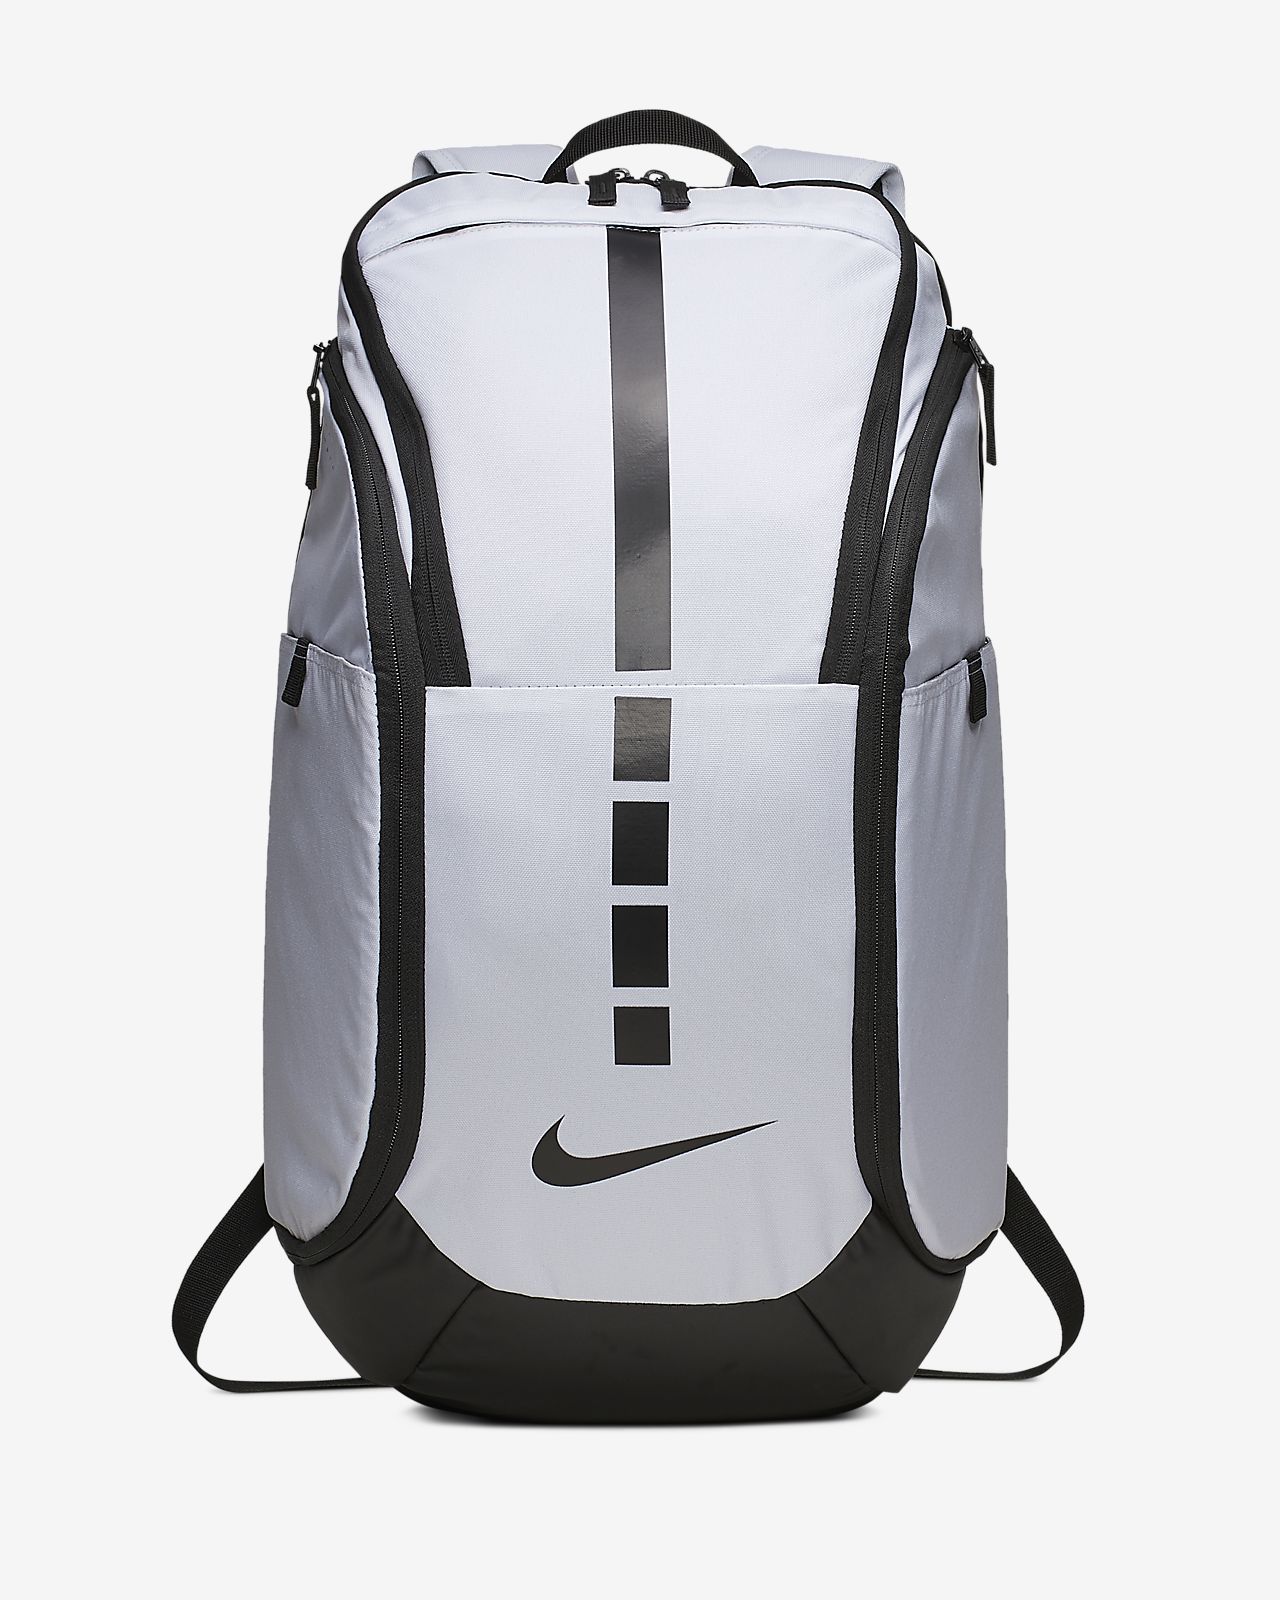 Nike Hoops Elite Pro Basketball Backpack